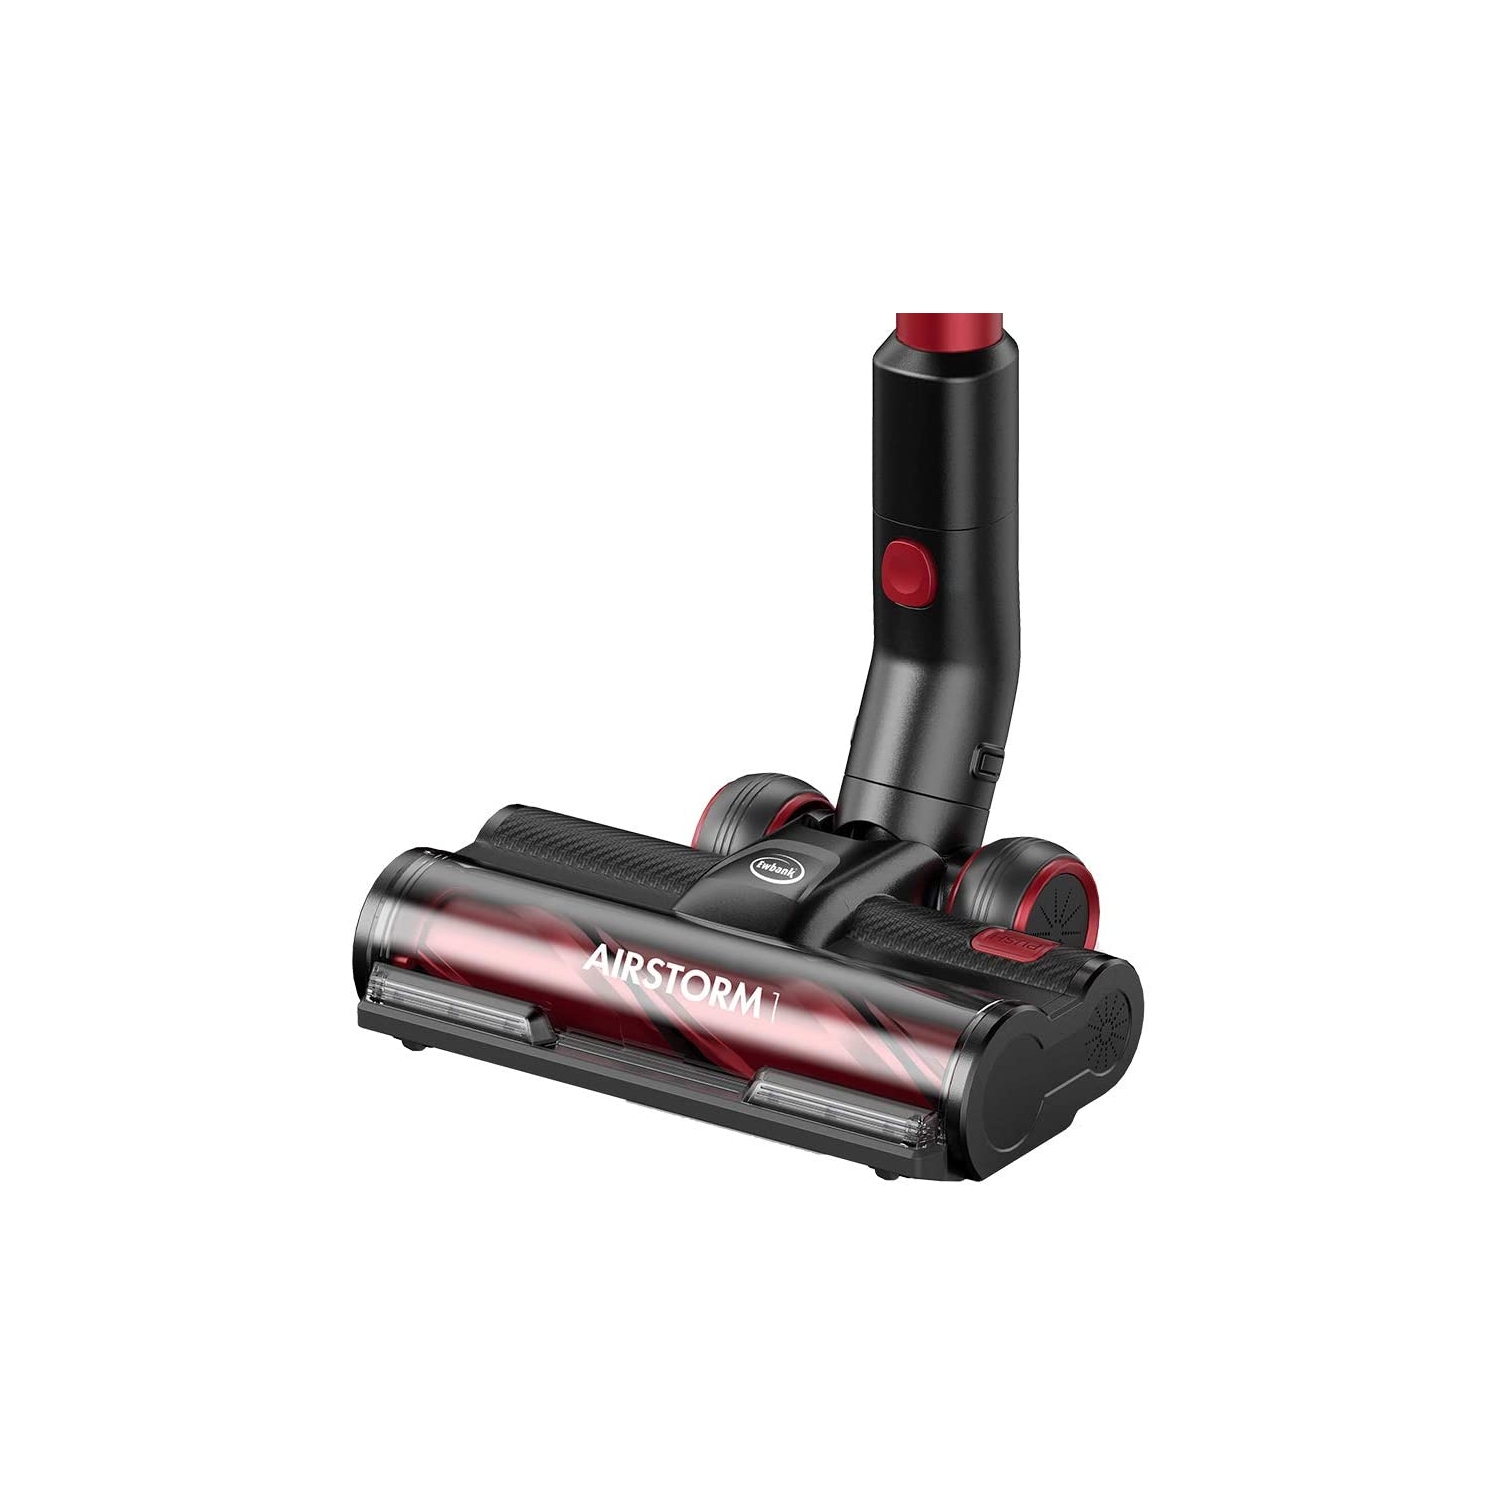 Ewbank Cordless Stick Vacuum - 3